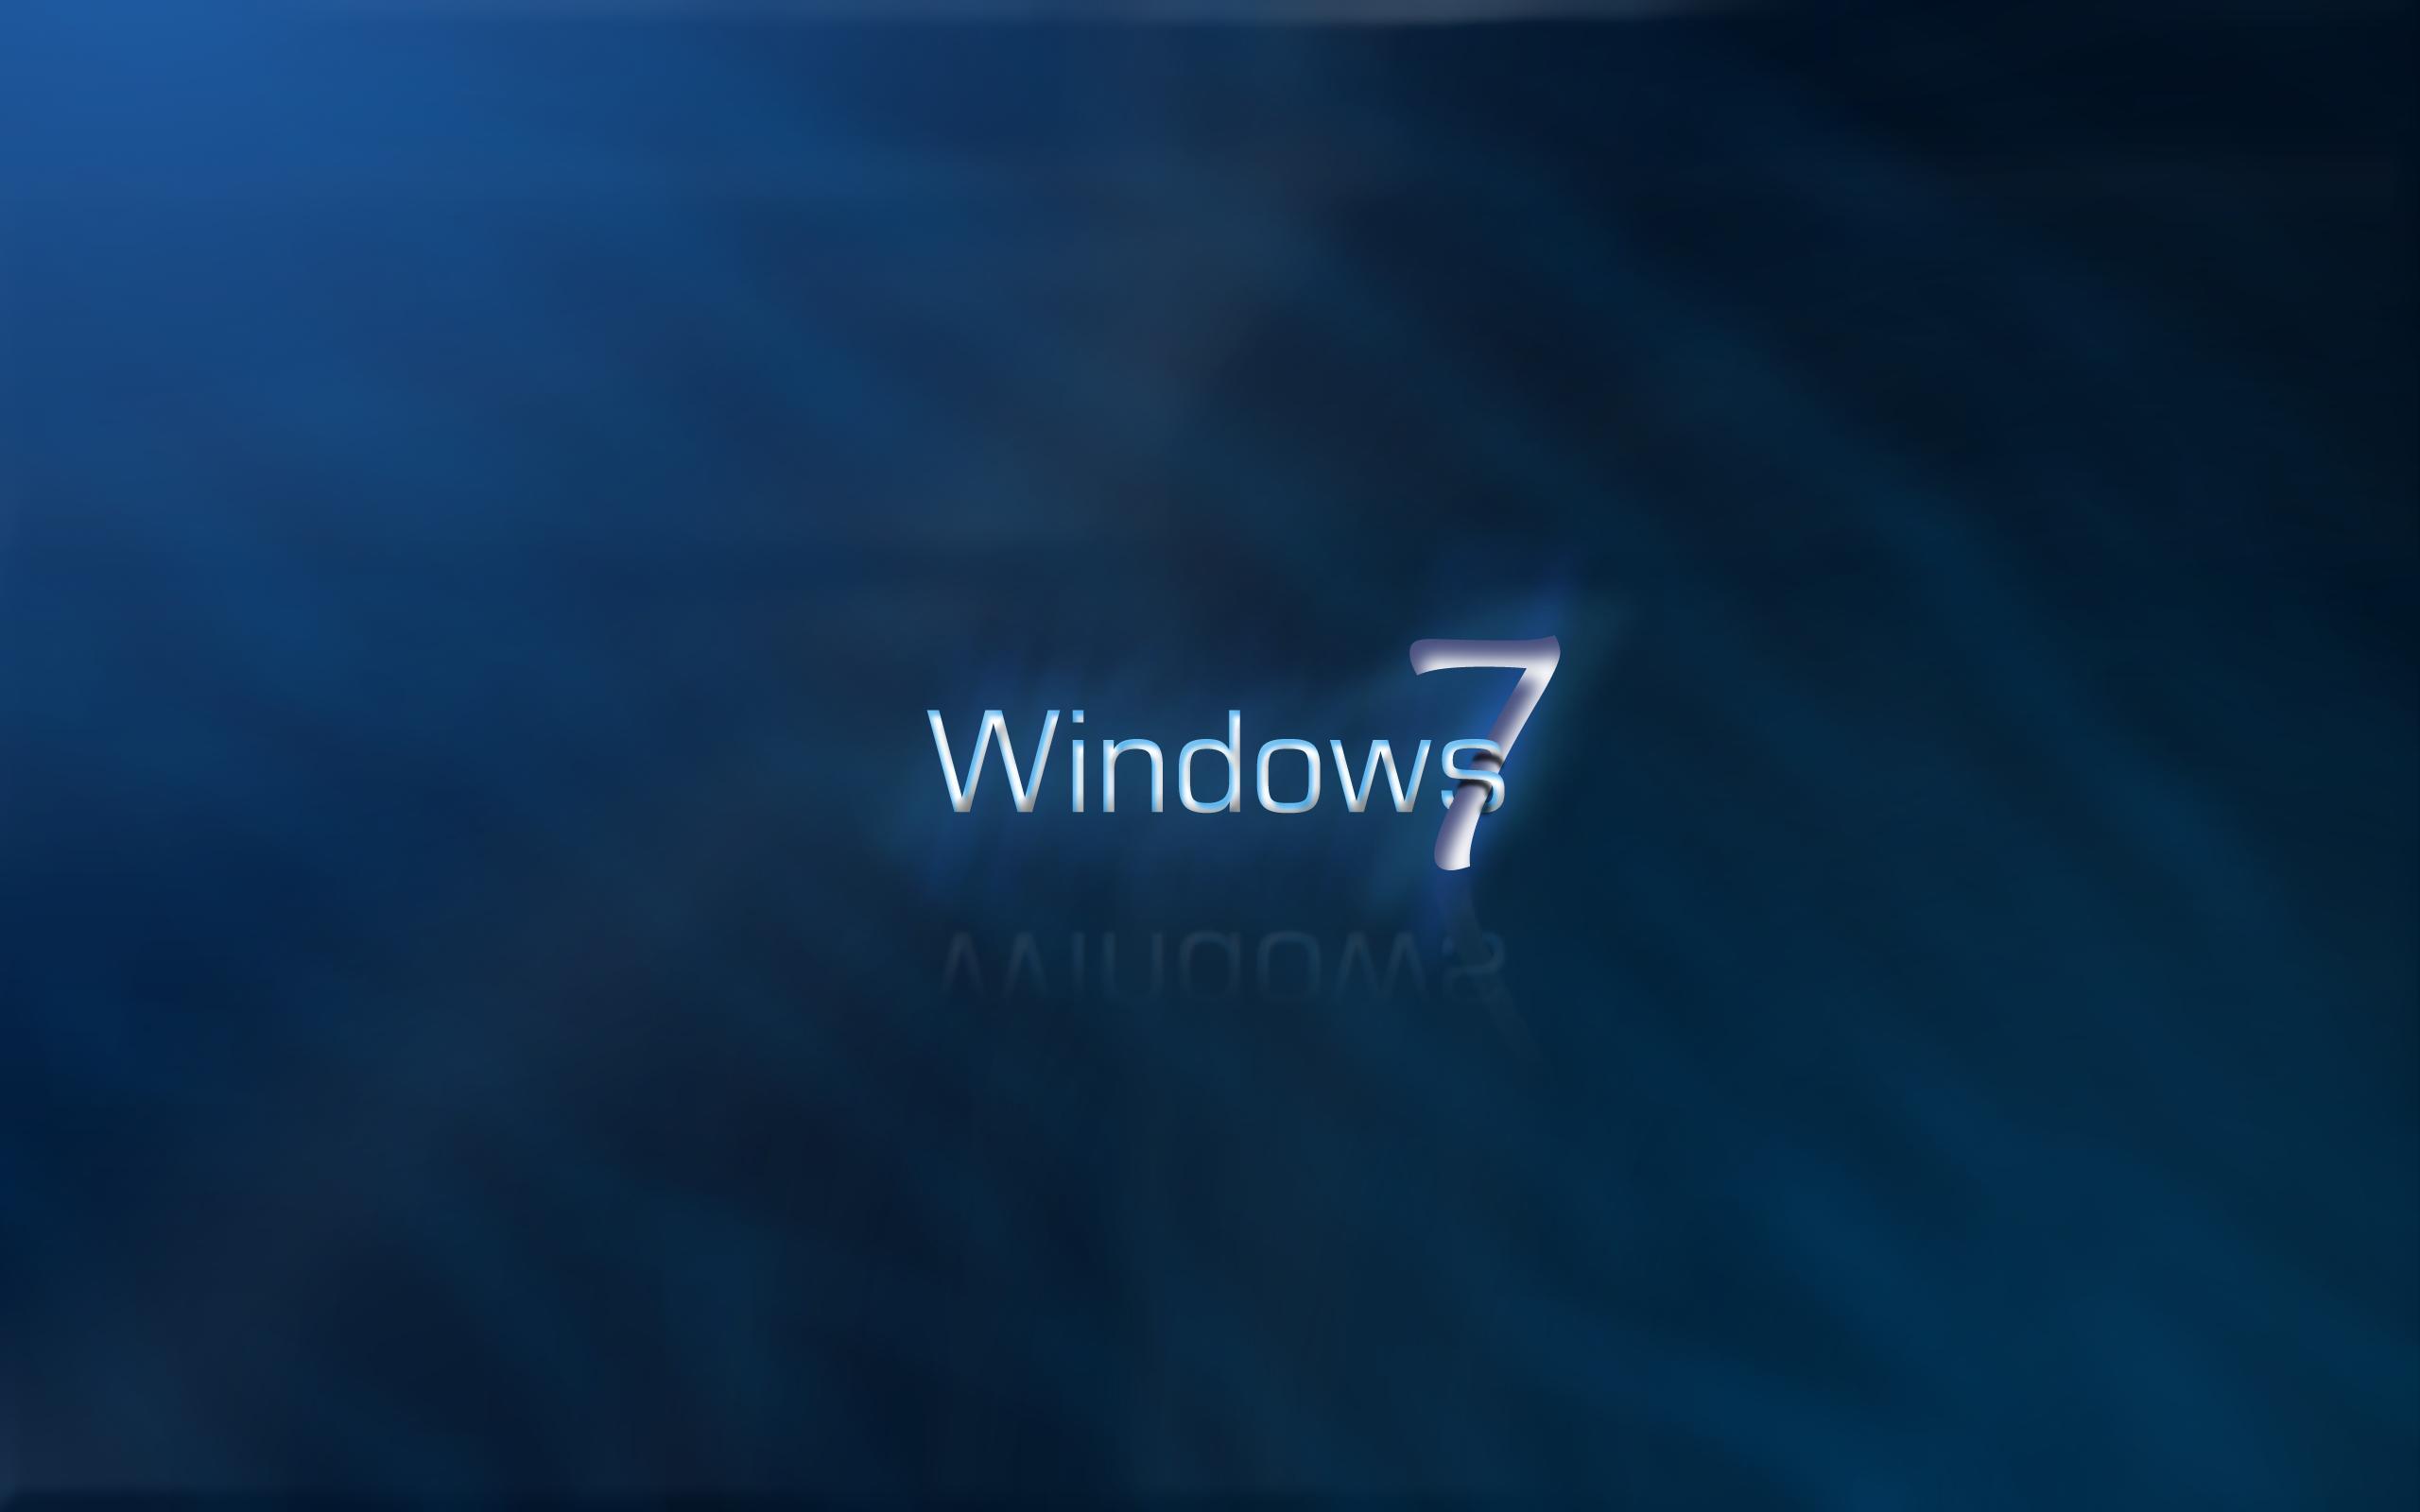 windows wallpaper free photo: Best Windows 7 Wallpaper